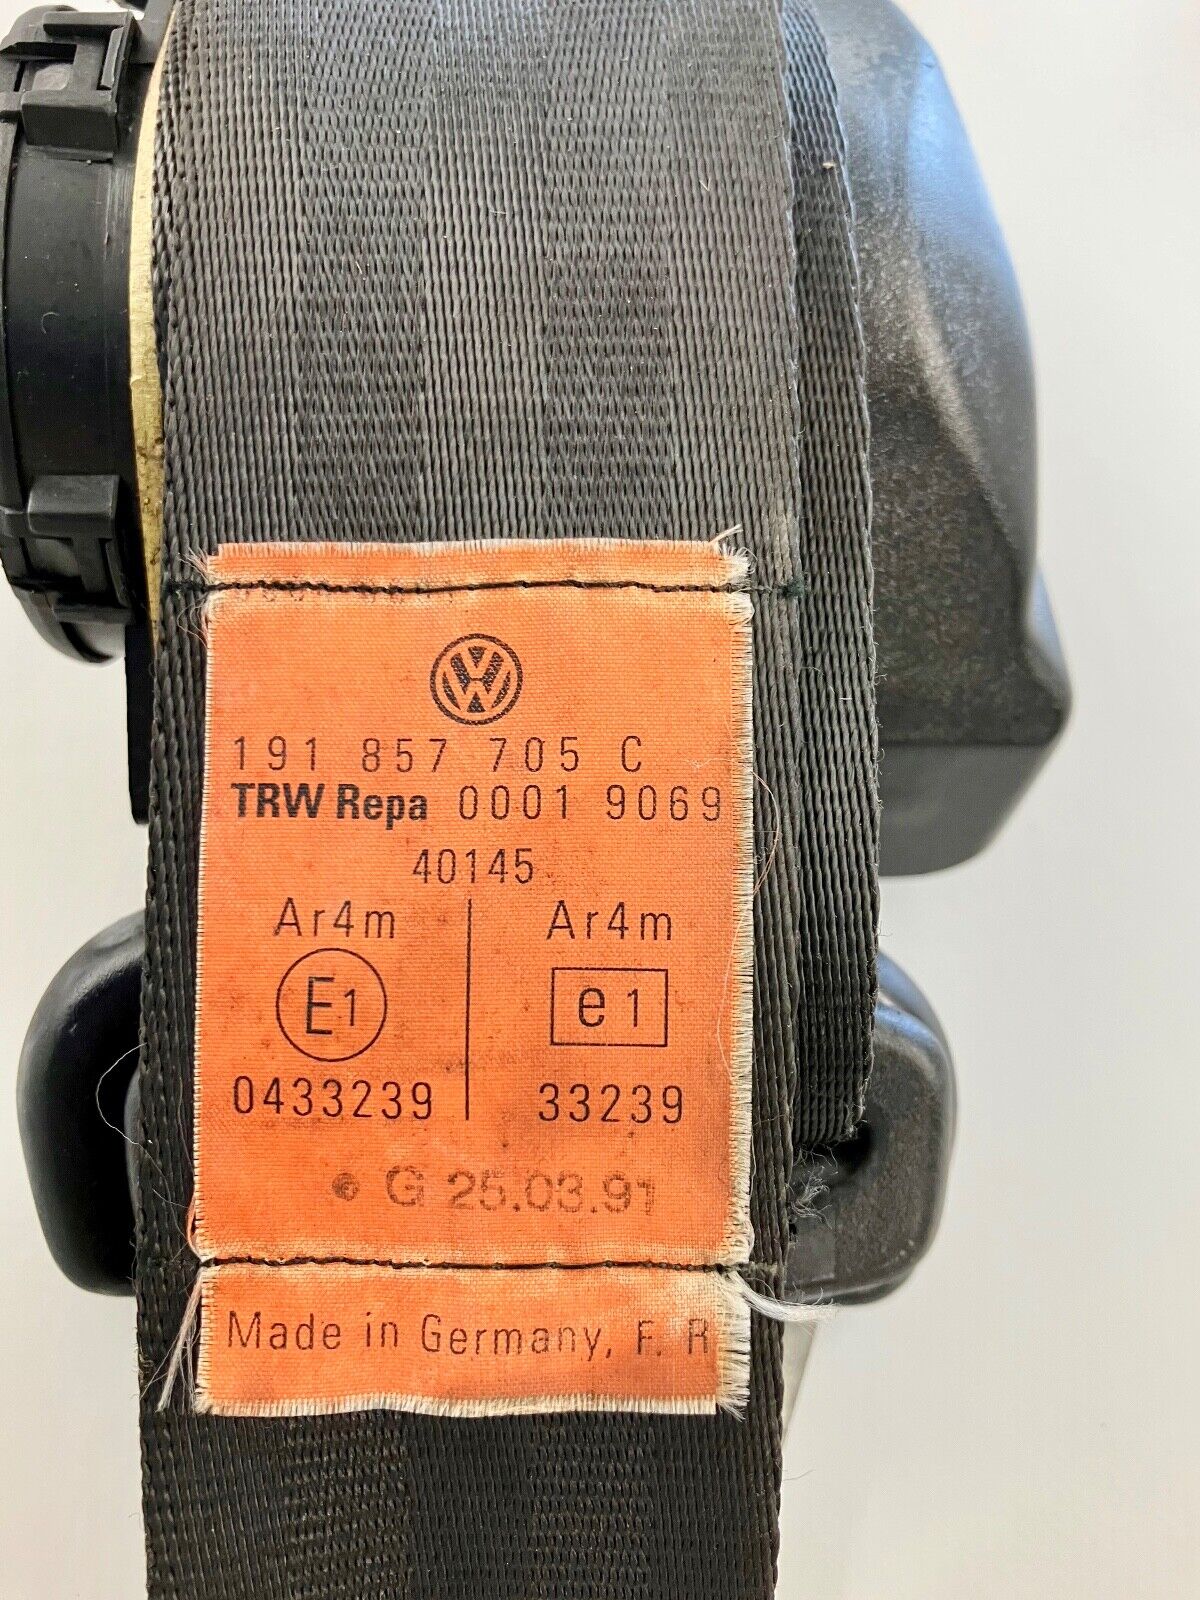 Sicherheitsgurt Gurt VW Golf 2 2/ 3 türer 191857705 C